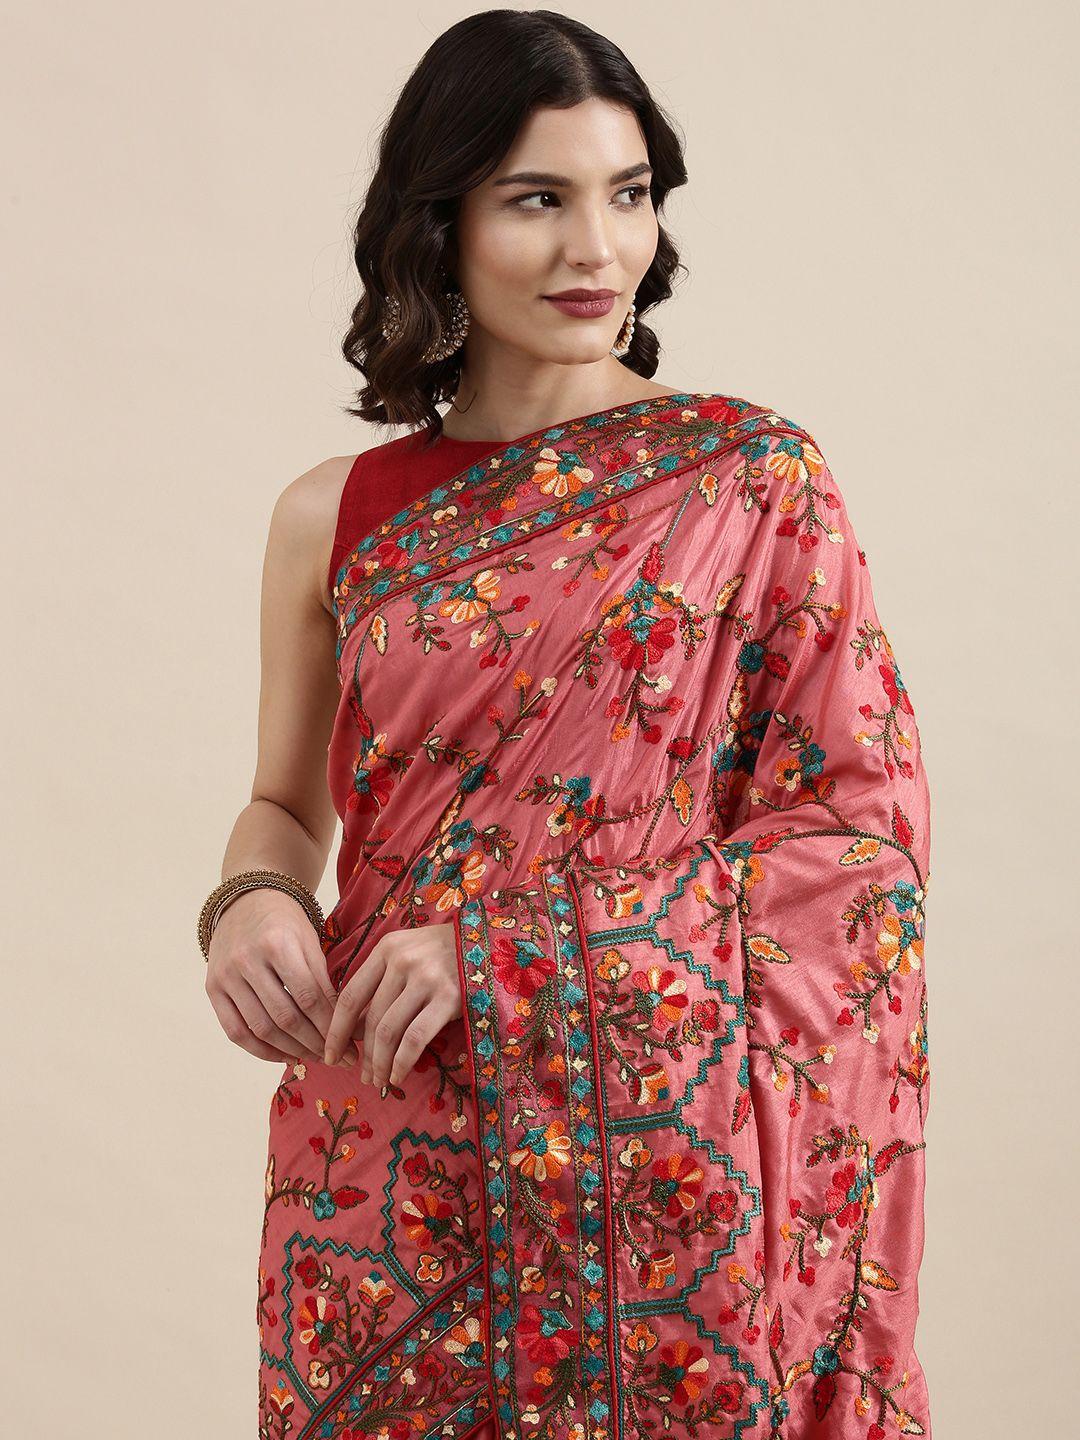 vairagee dusty pink & teal blue ethnic motifs embroidered dola silk saree